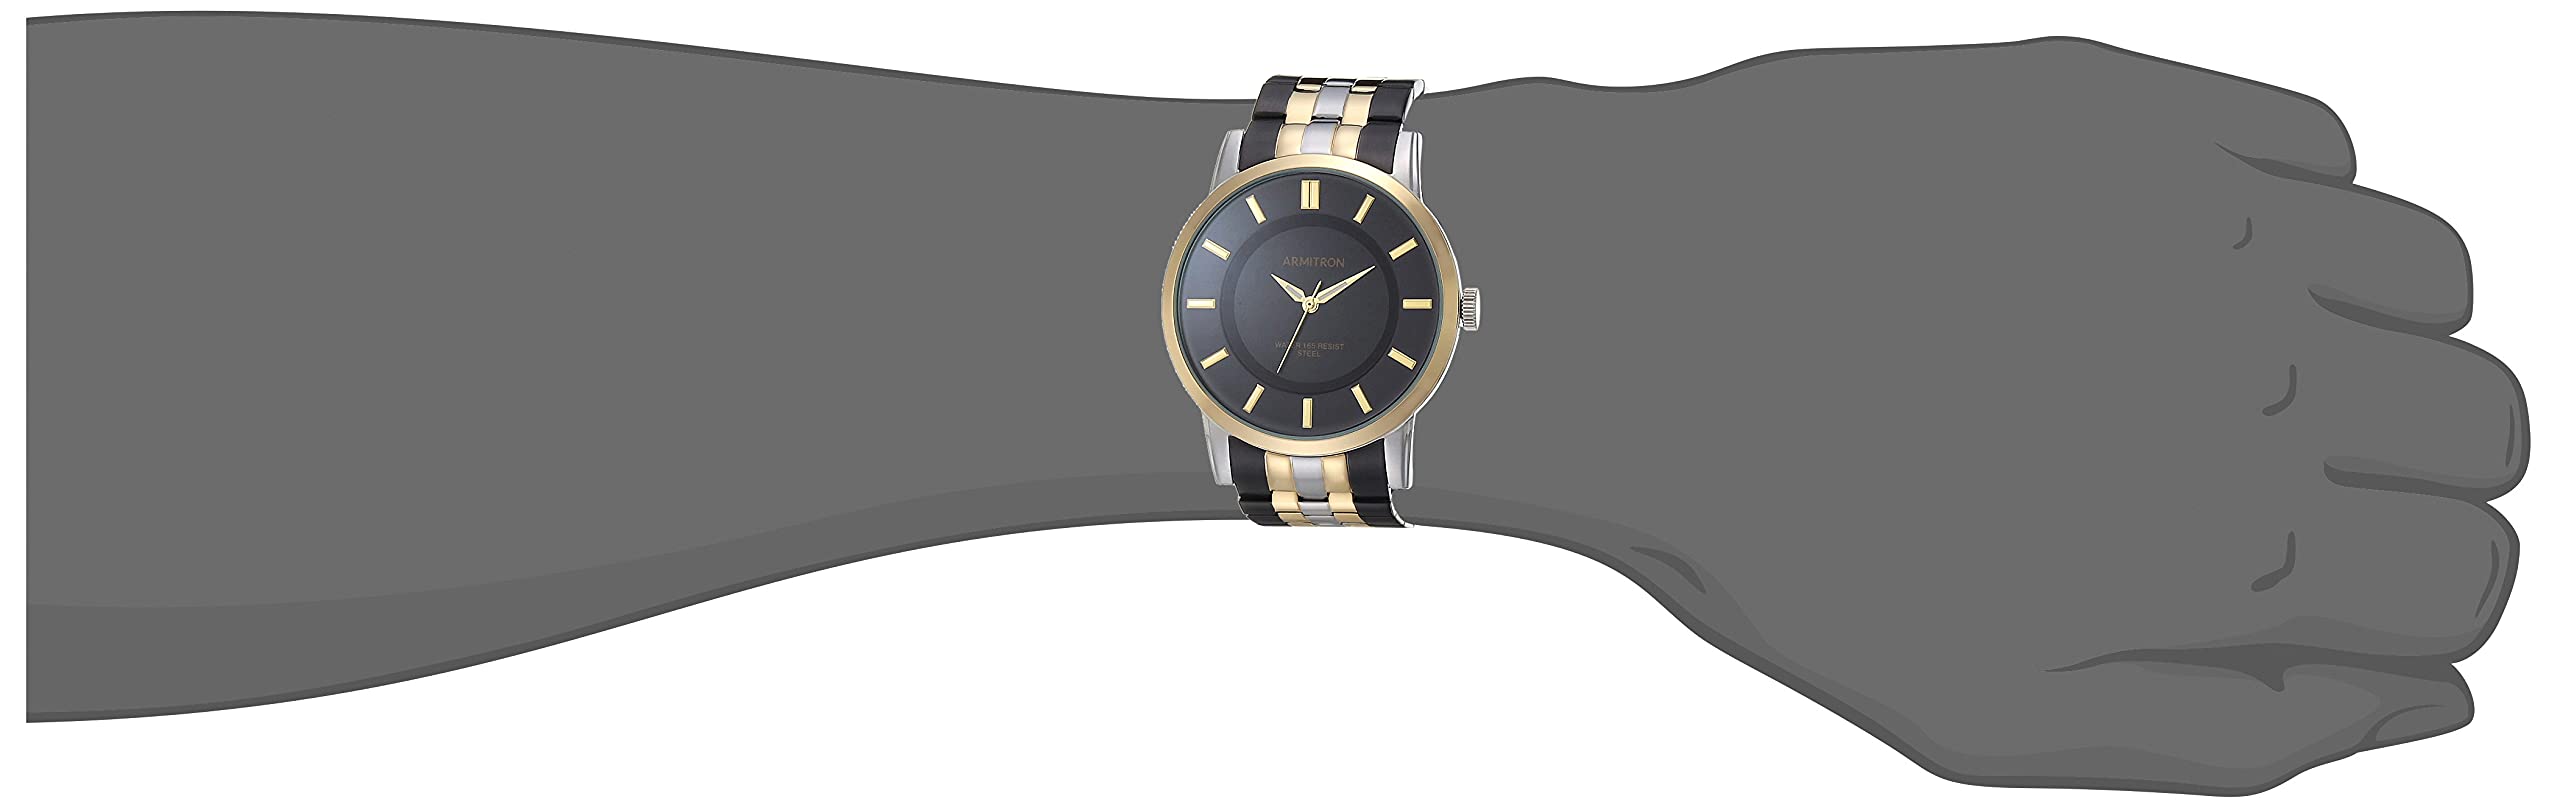 Armitron Men's Bracelet Watch, 20/4962